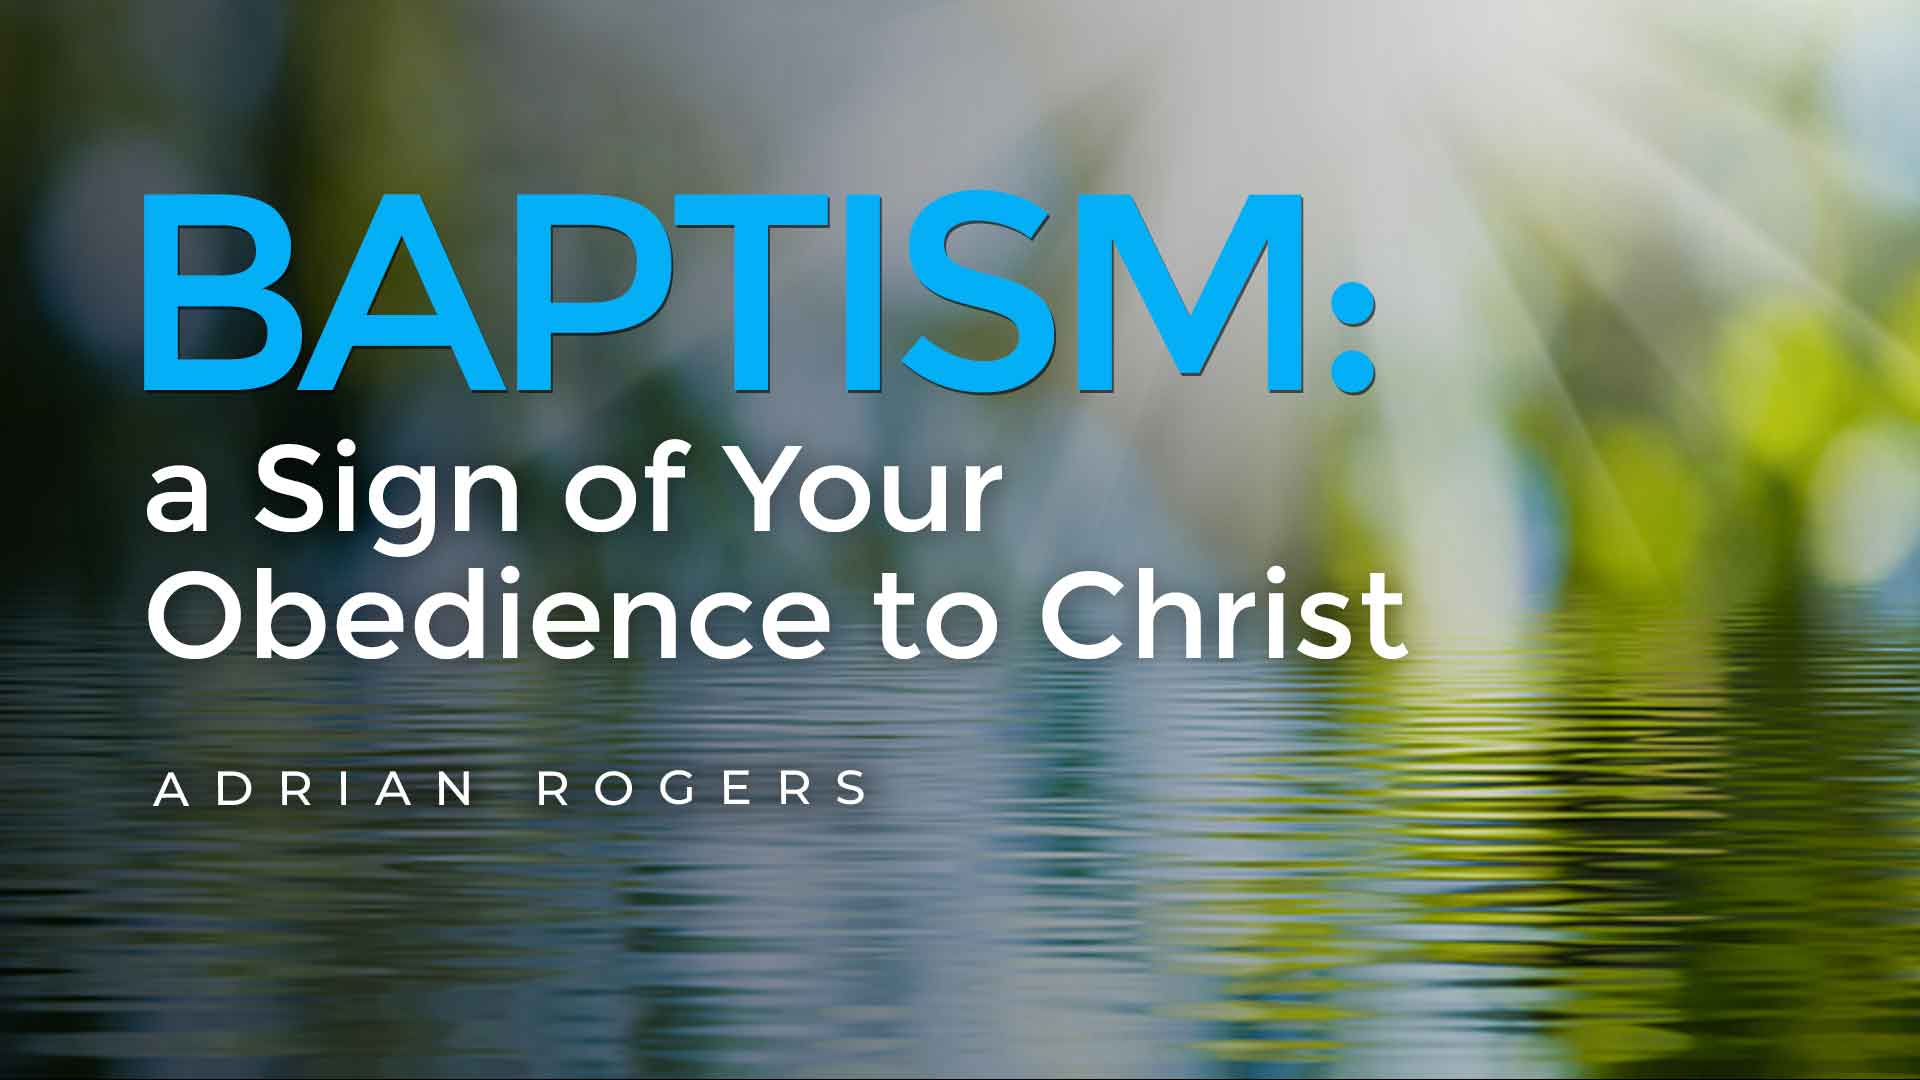 Baptisma Signof Your Obedienceto Christ 1920x1080